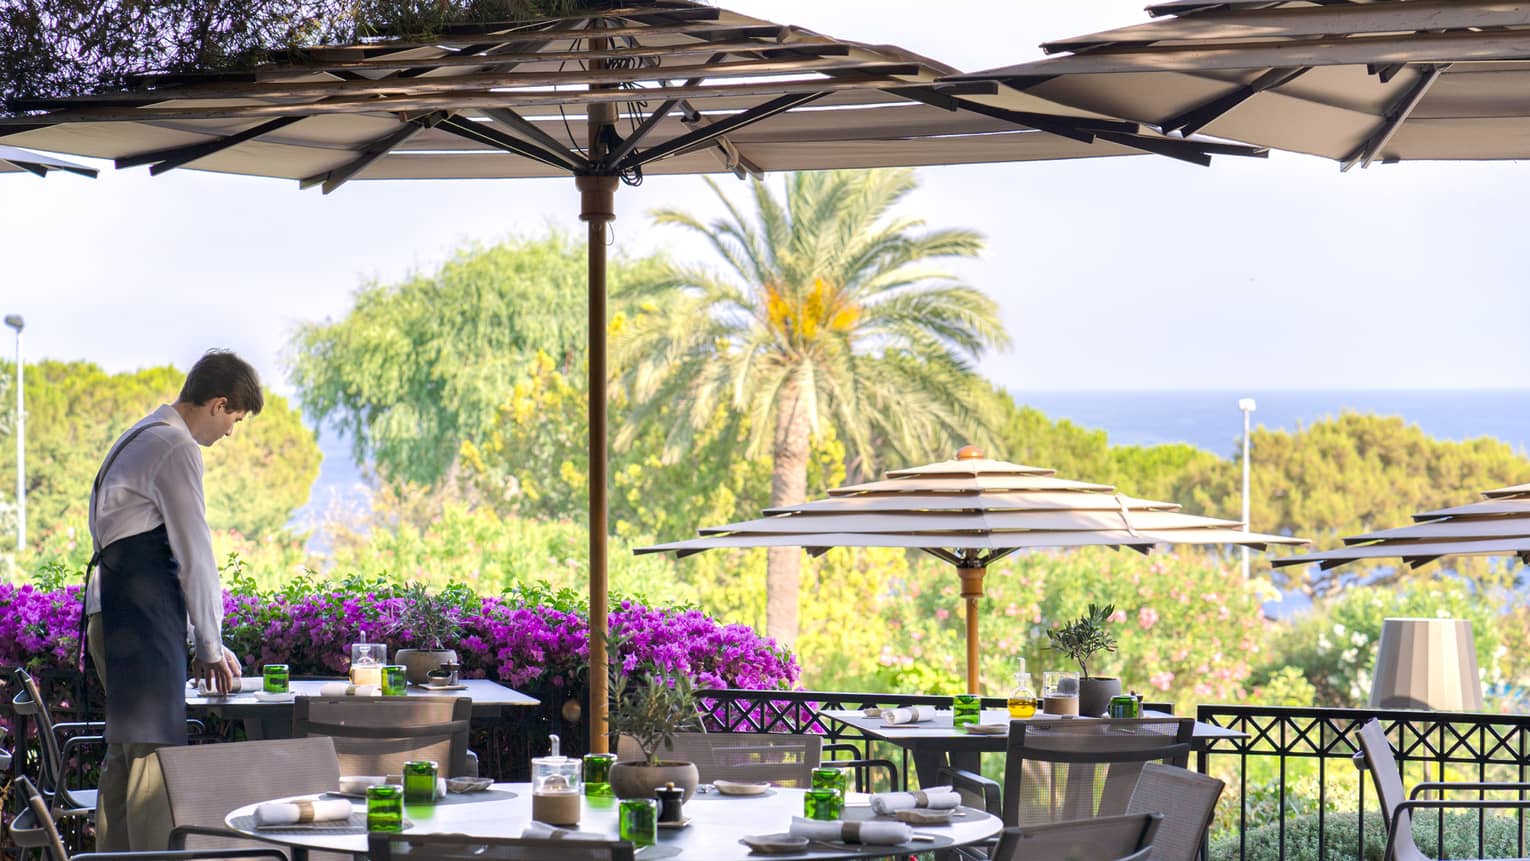 Server arranging napkin on La Véranda terrace under umbrella, palm tree and sea view